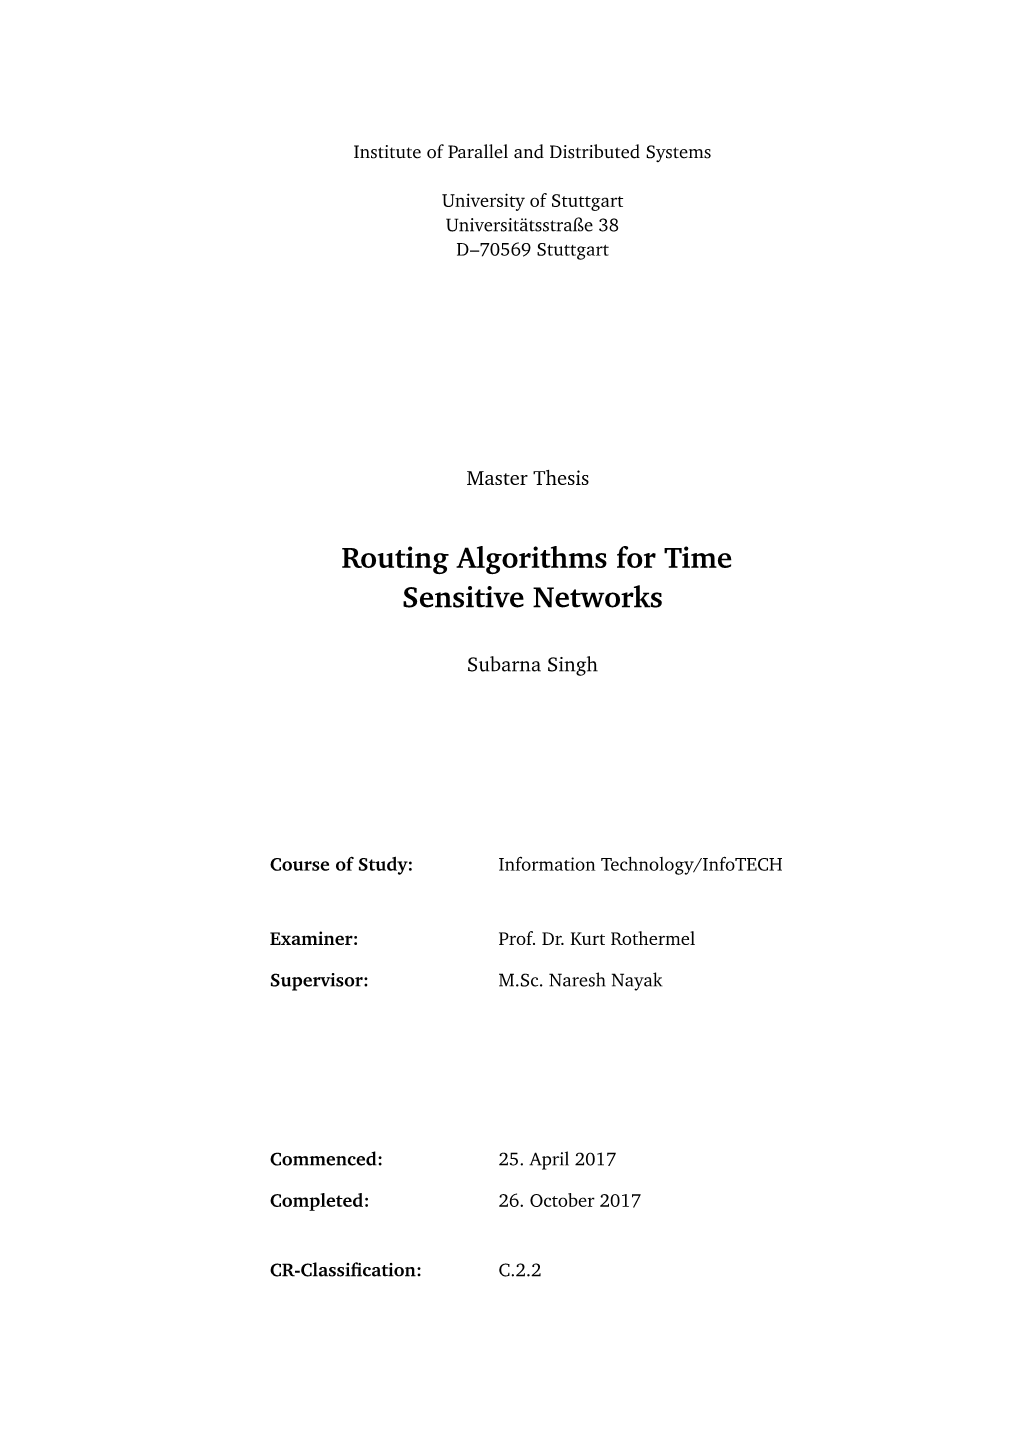 Routing Algorithms for Time Sensitive Networks